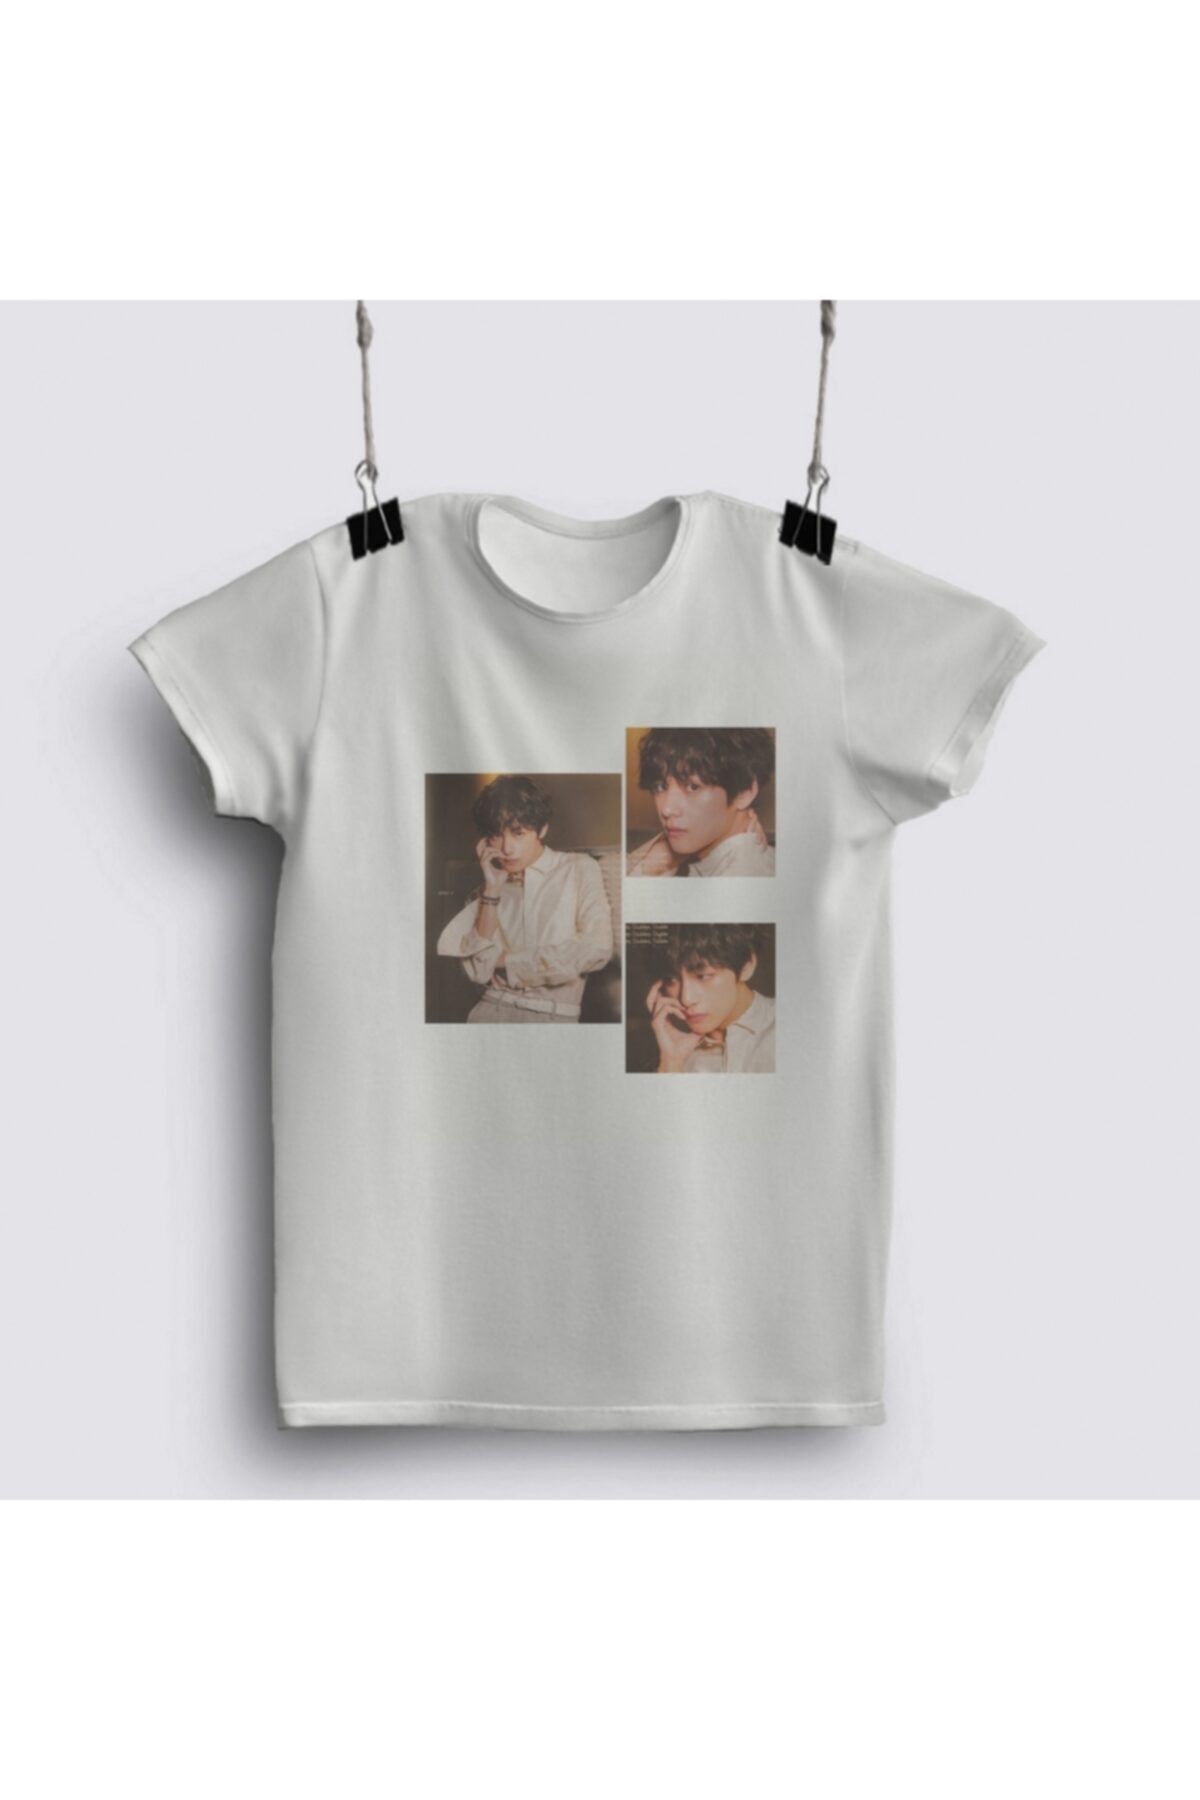 Fizello Bts Taehyung Bon Voyage Aesthetic T-shirt